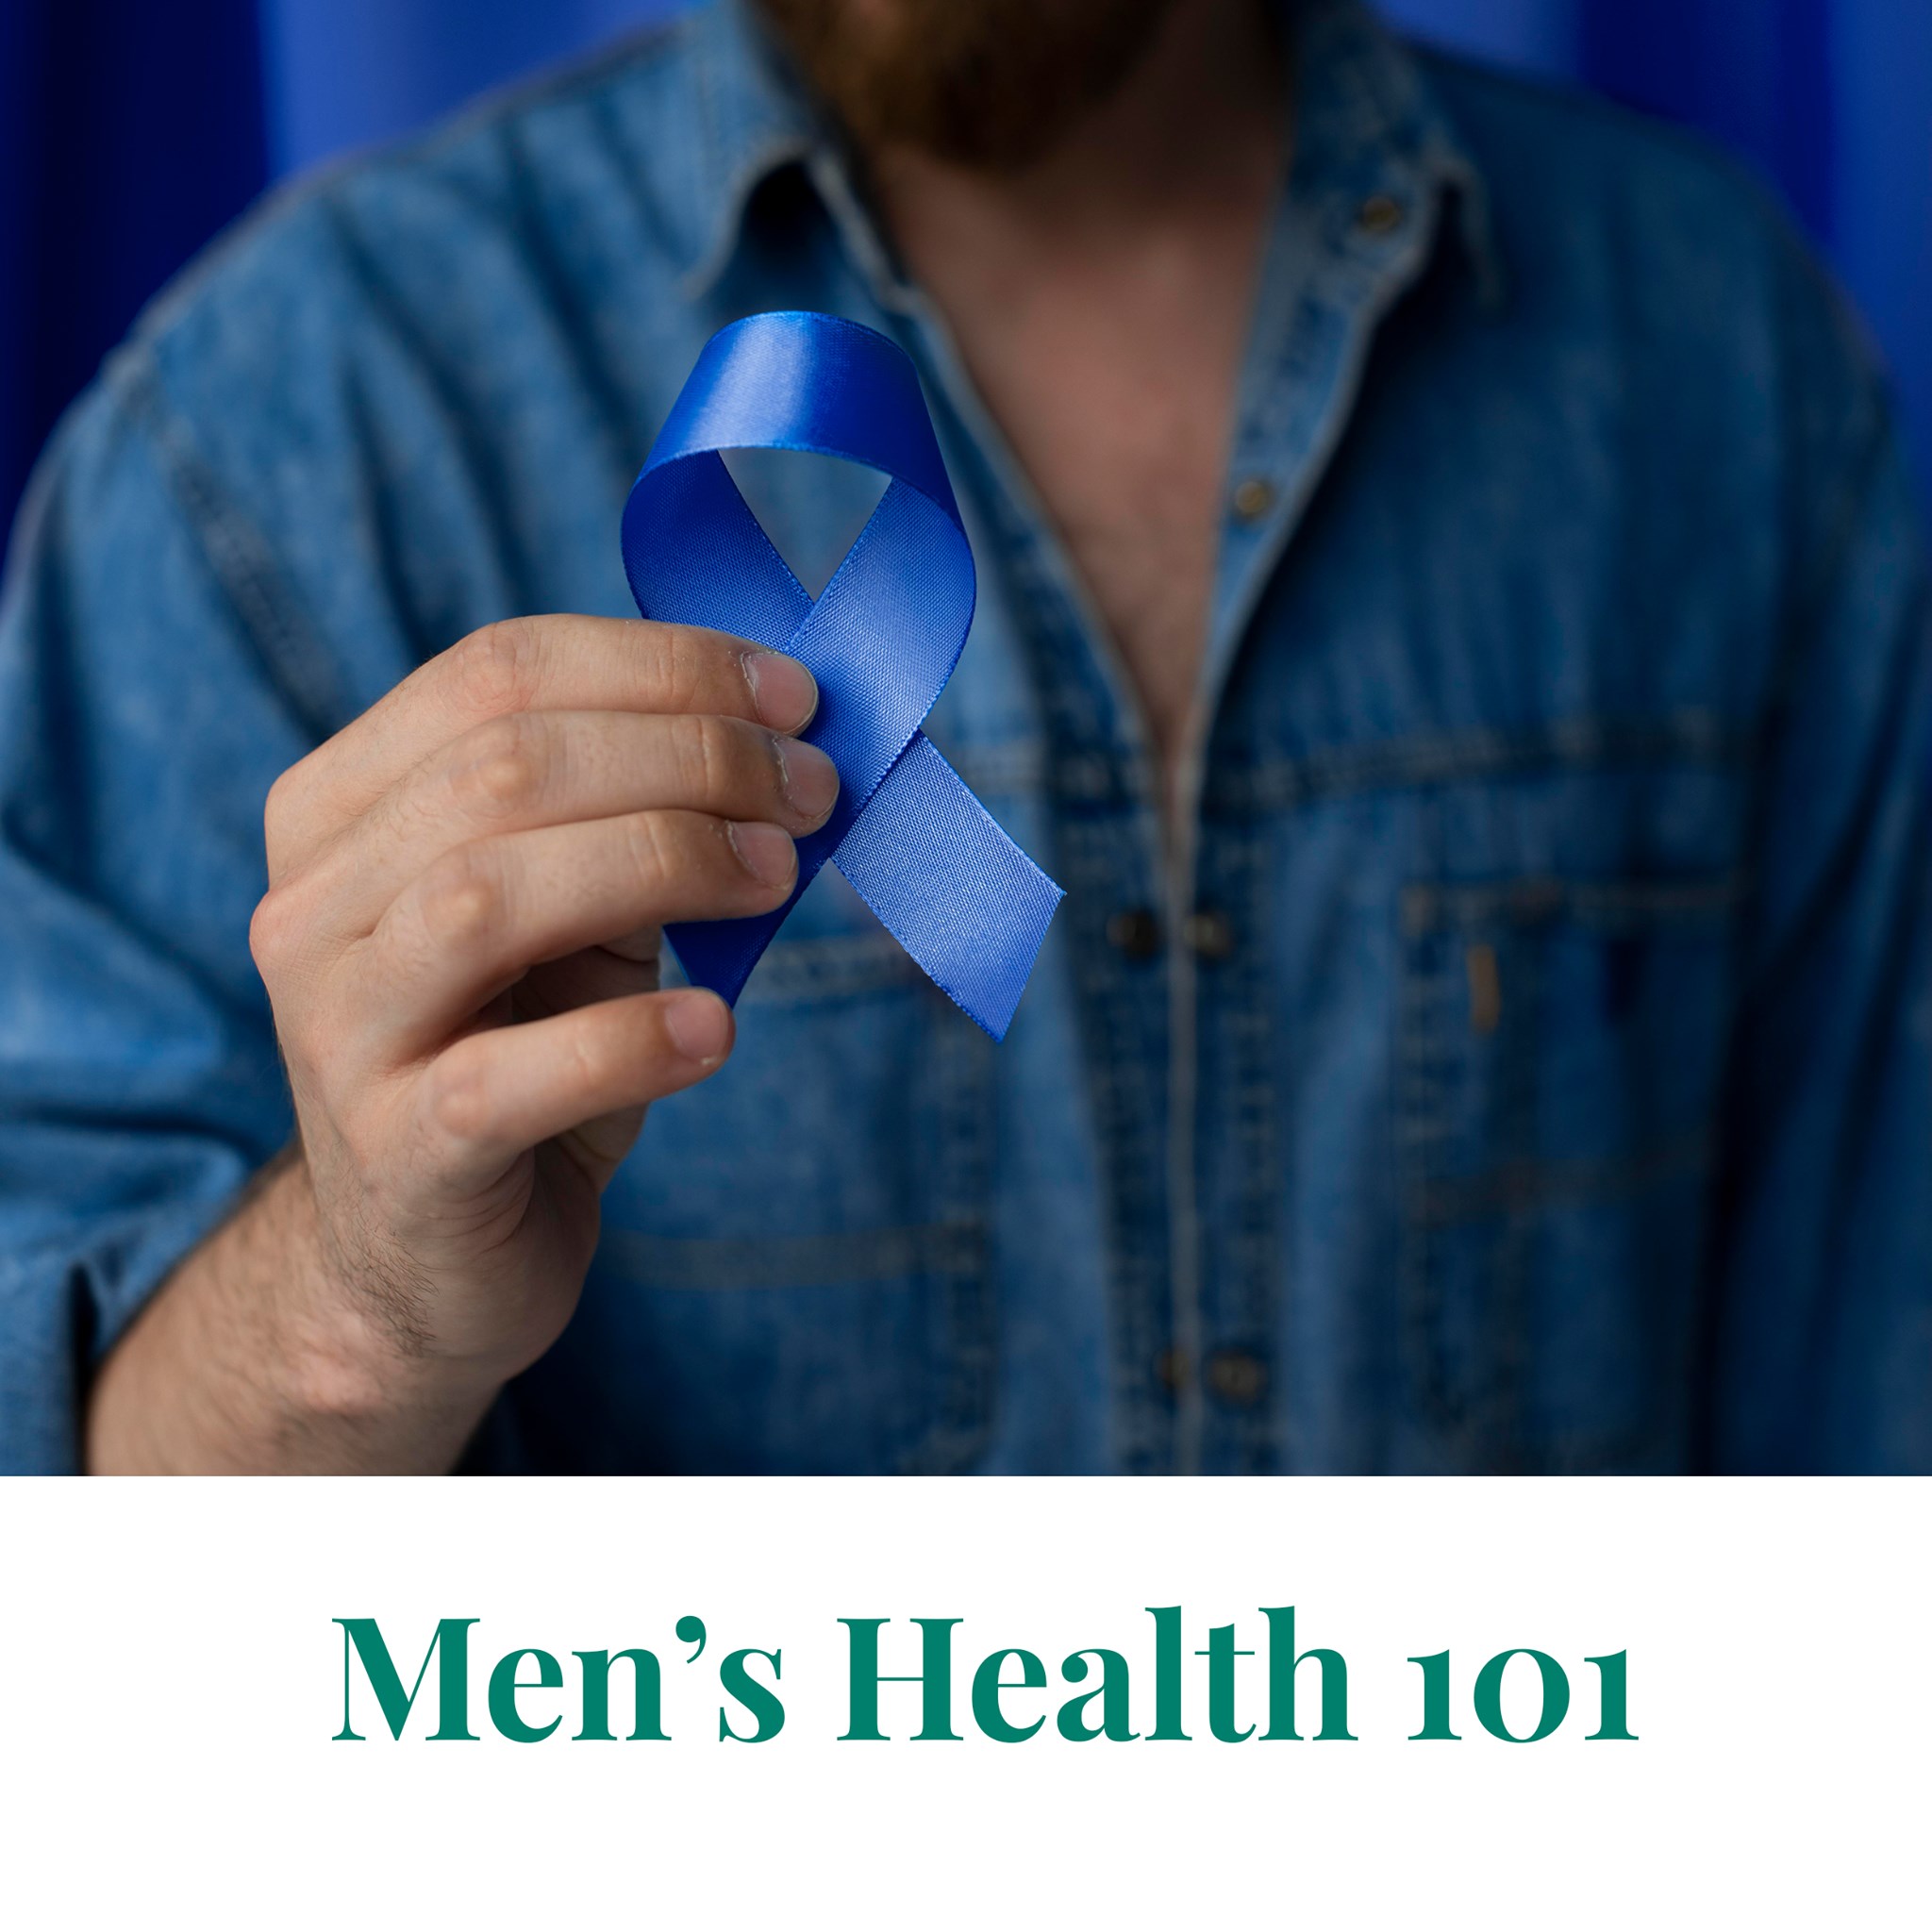 Cancer in Men: Testicular Cancer, Prostate Cancer And Breast Cancer